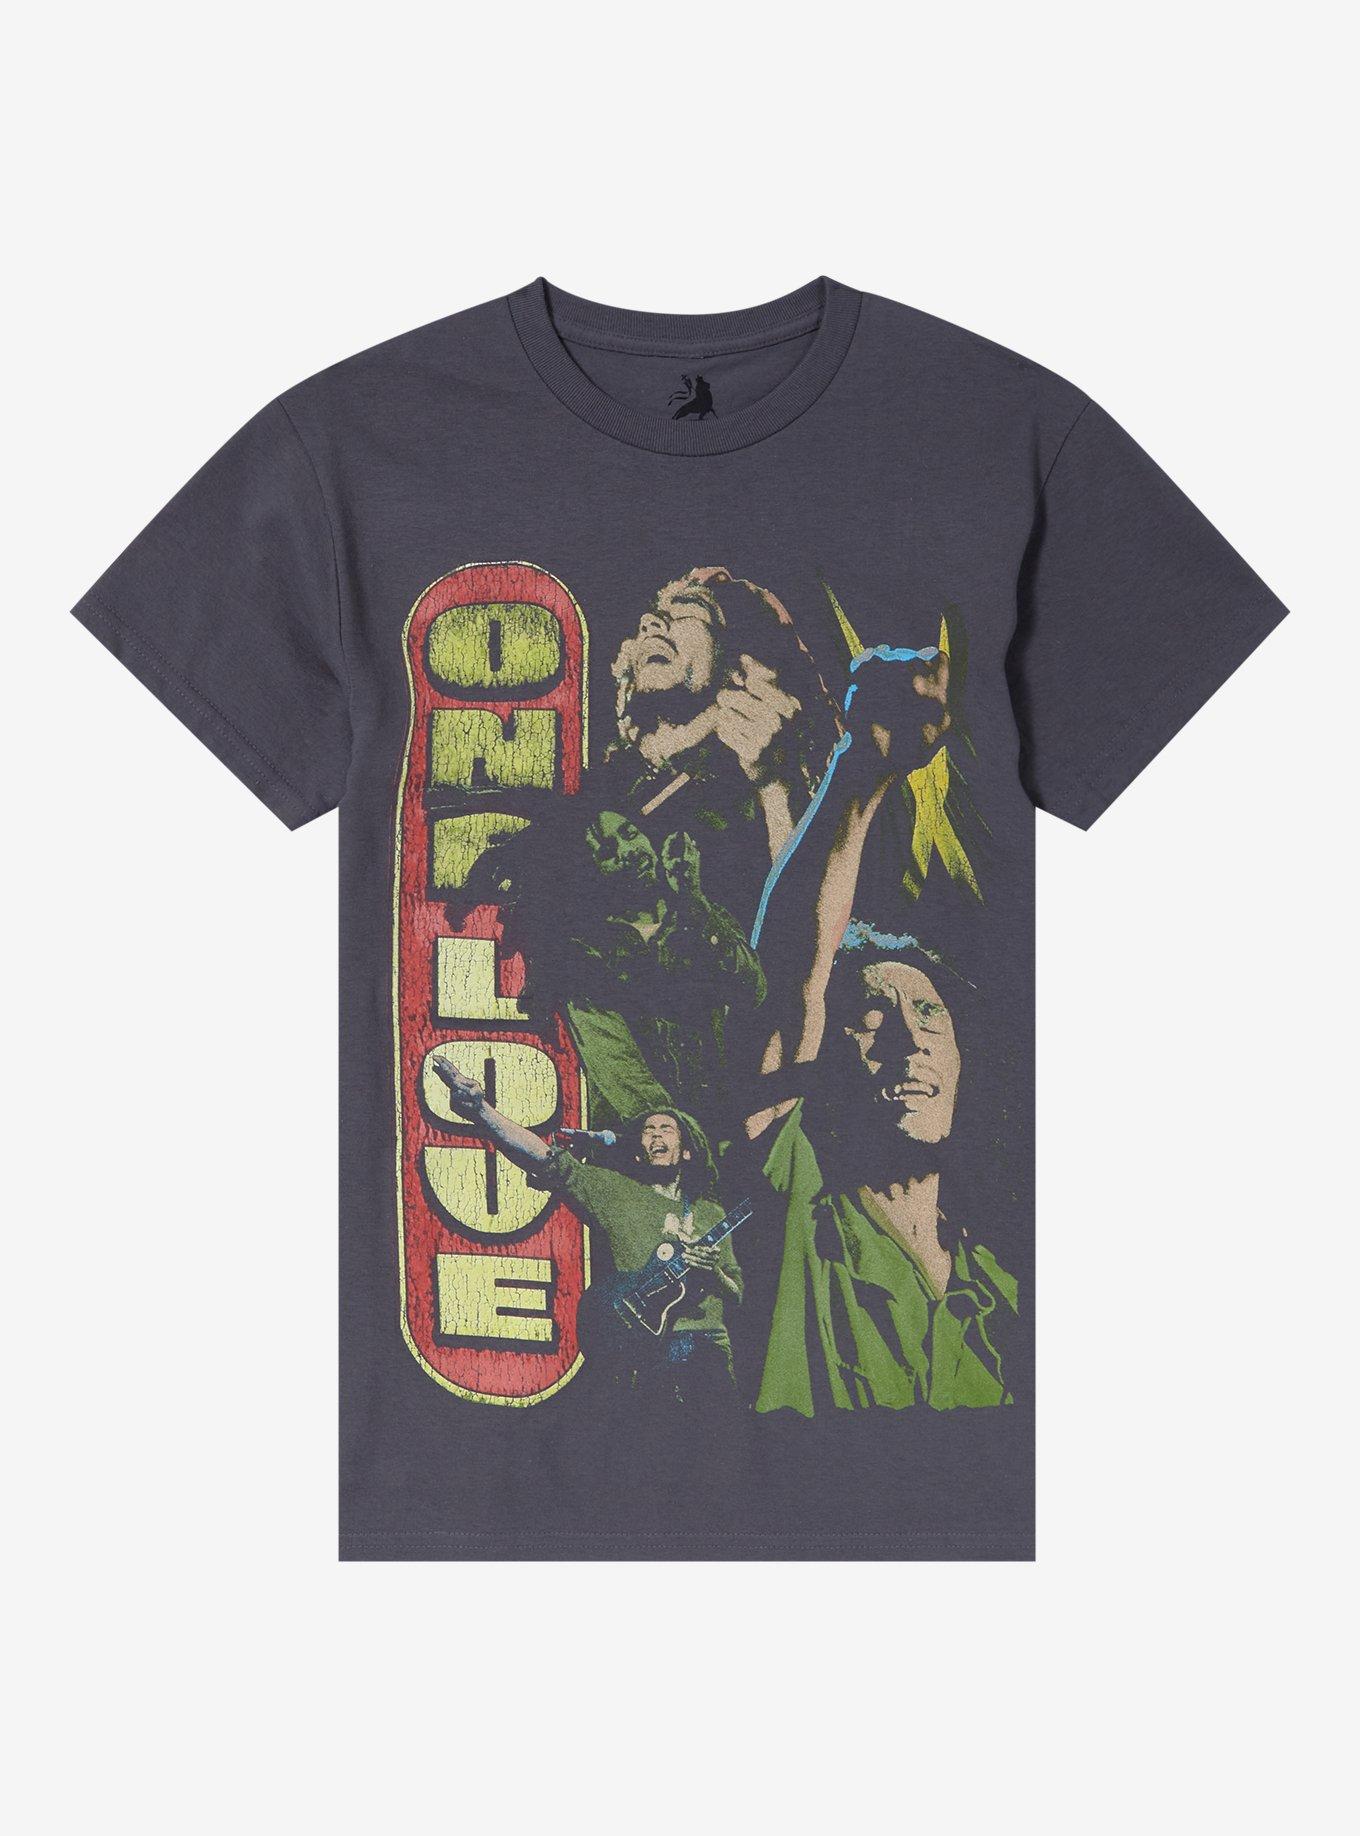 Bob Marley One Love Collage Boyfriend Fit Girls T-Shirt | Hot Topic